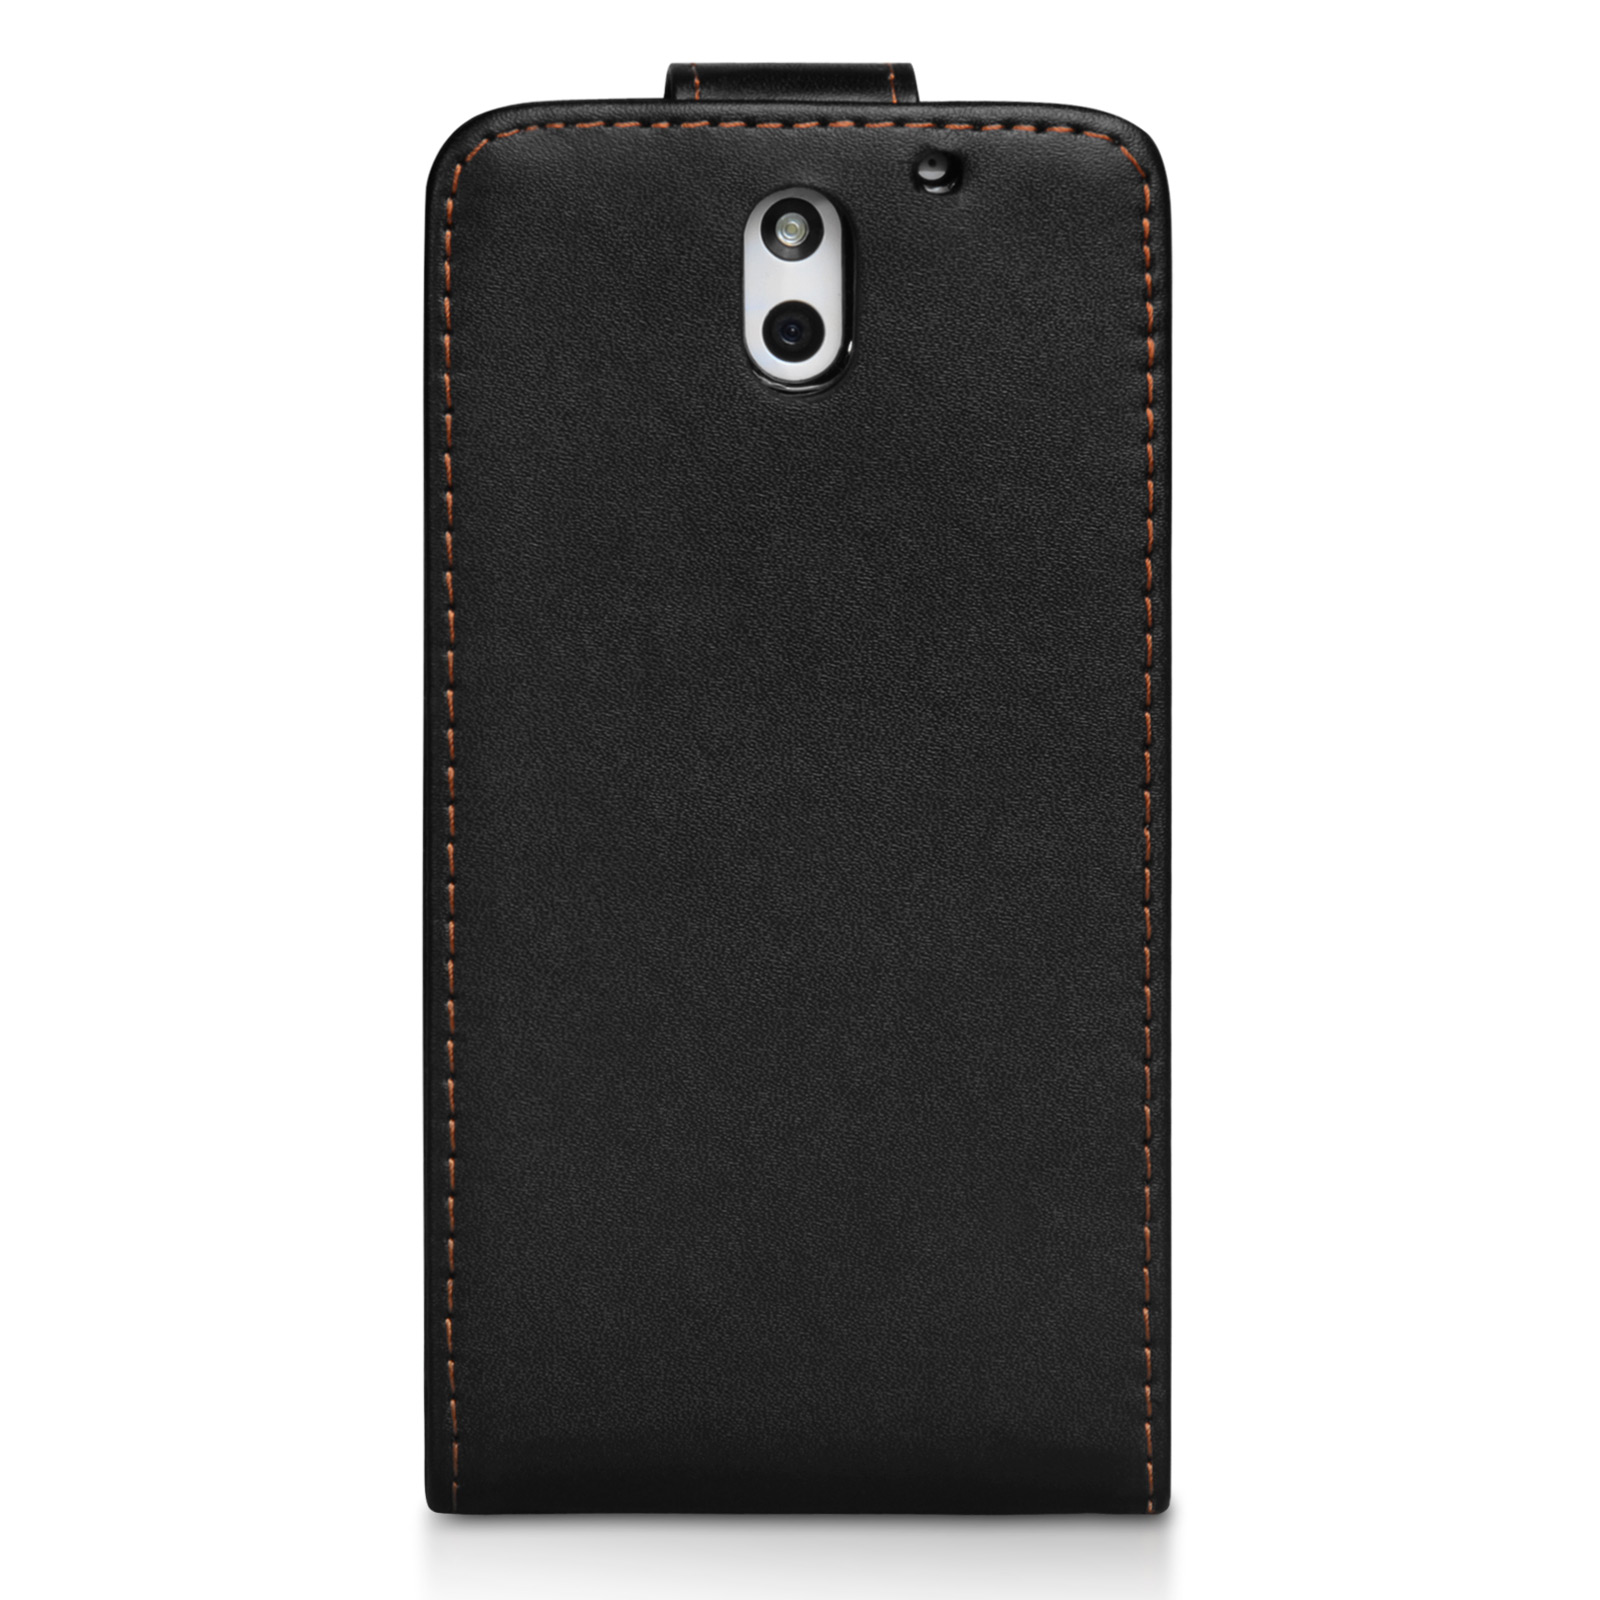 YouSave Accessories HTC Desire 610 Leather-Effect Flip Case - Black